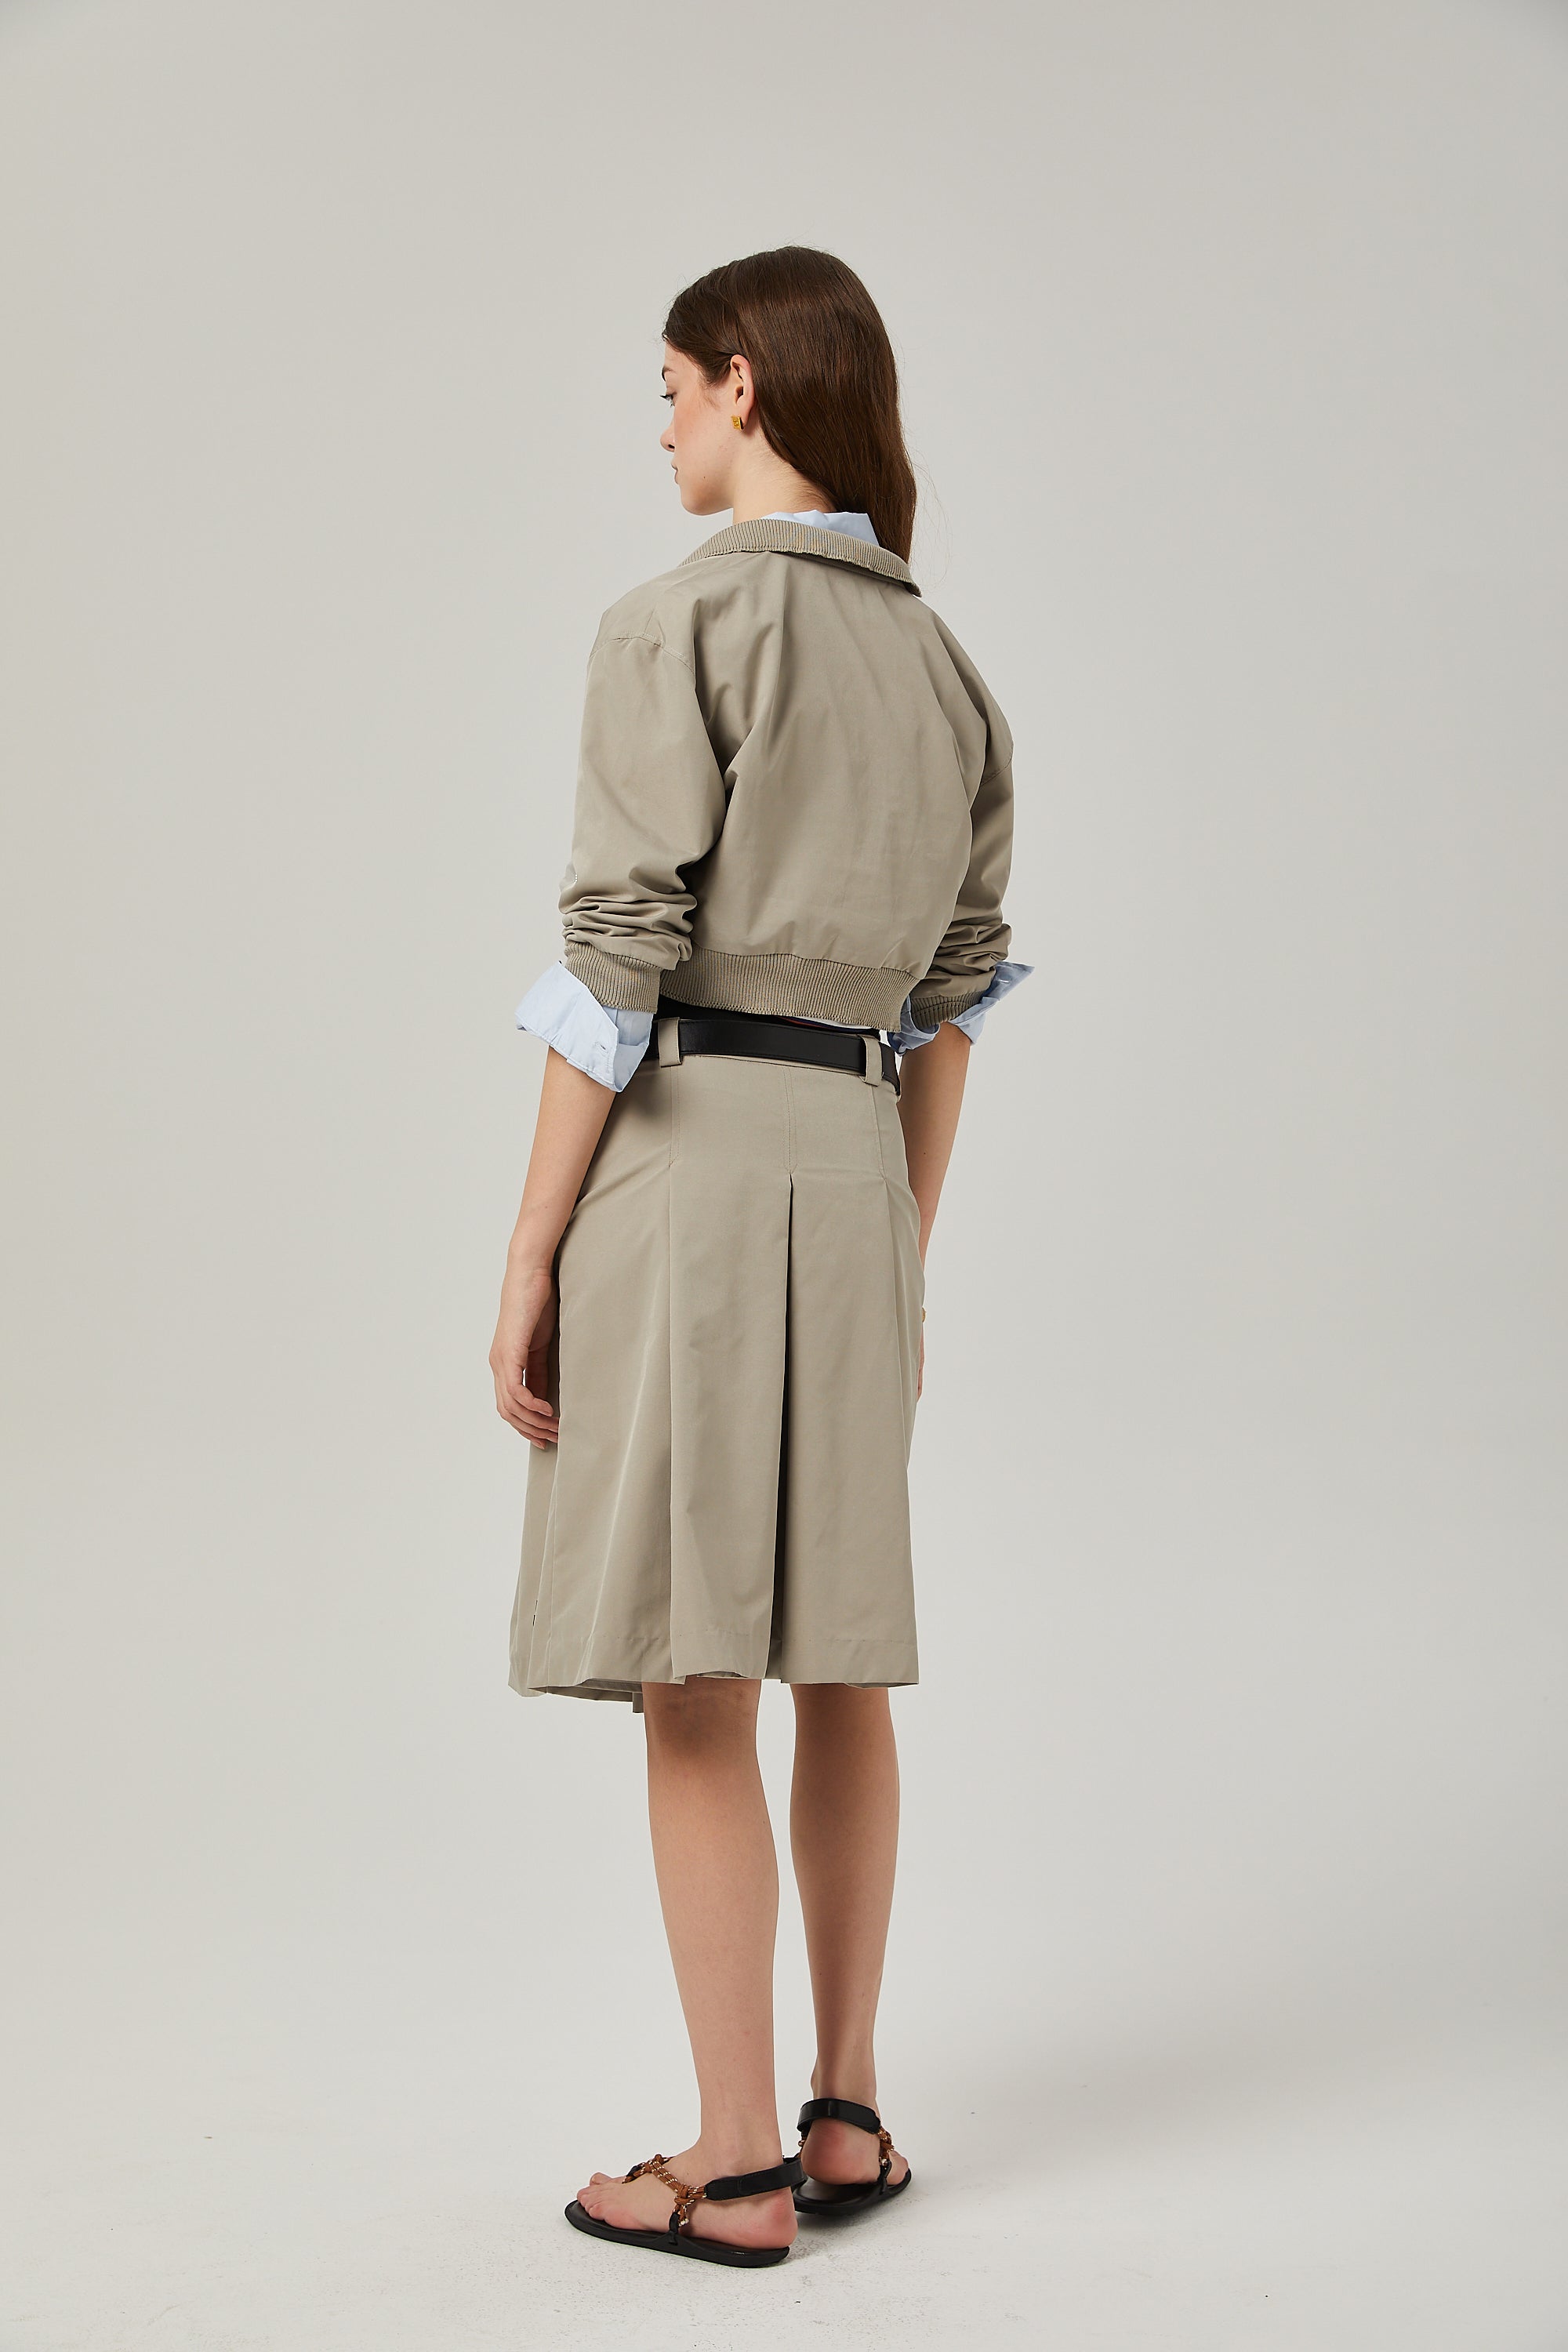 Paloma beige cotton jacket & skirt matching set